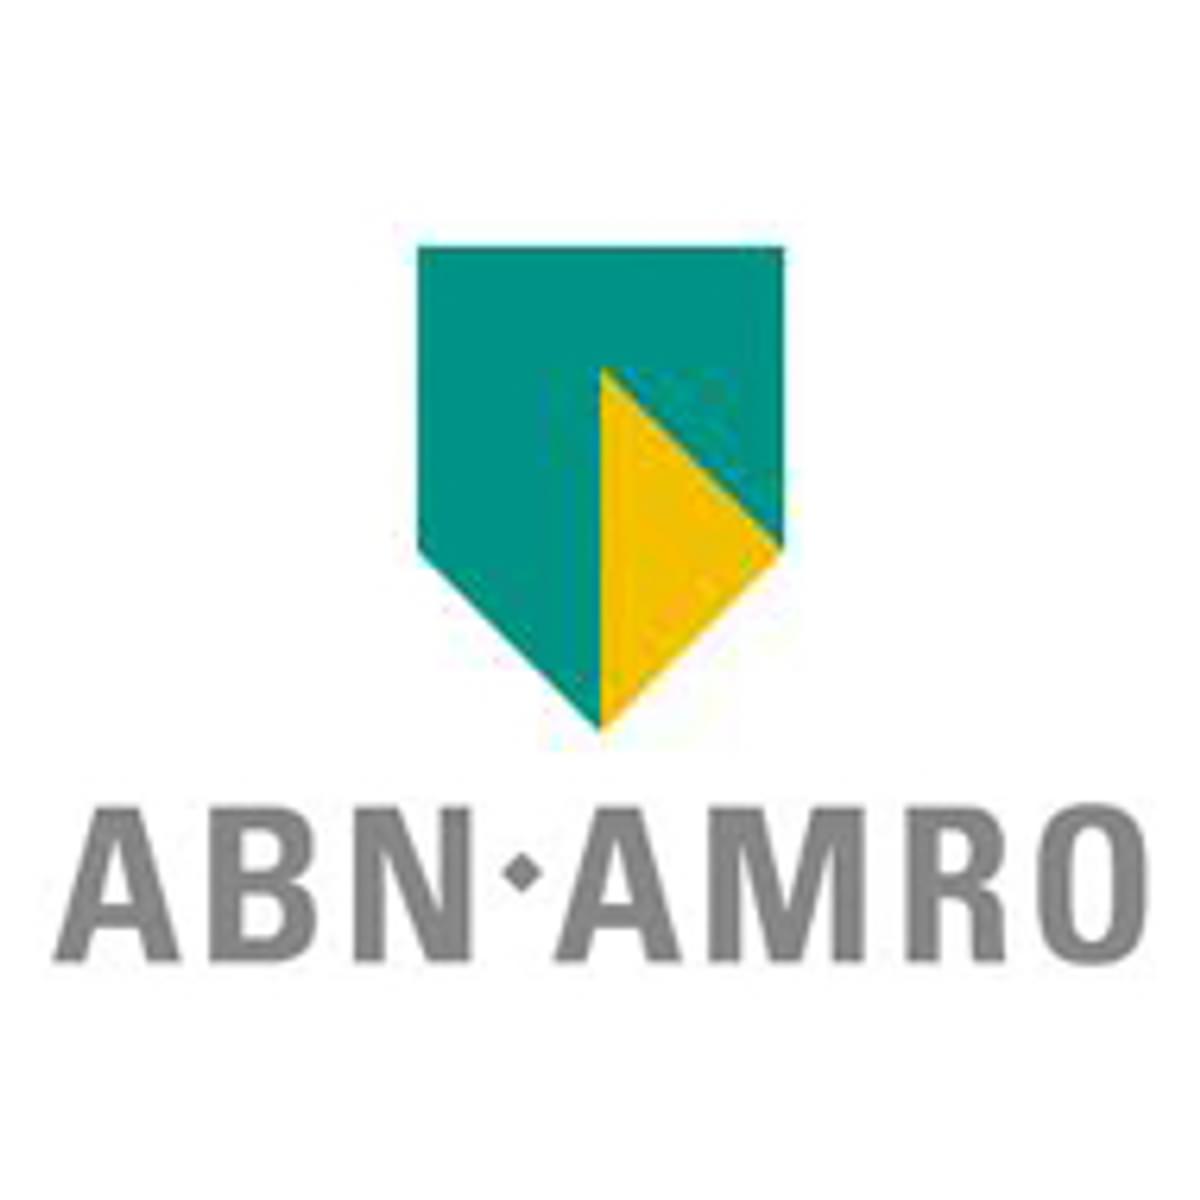 ABN AMRO en QuSoft werken samen rond quantum software en computing image